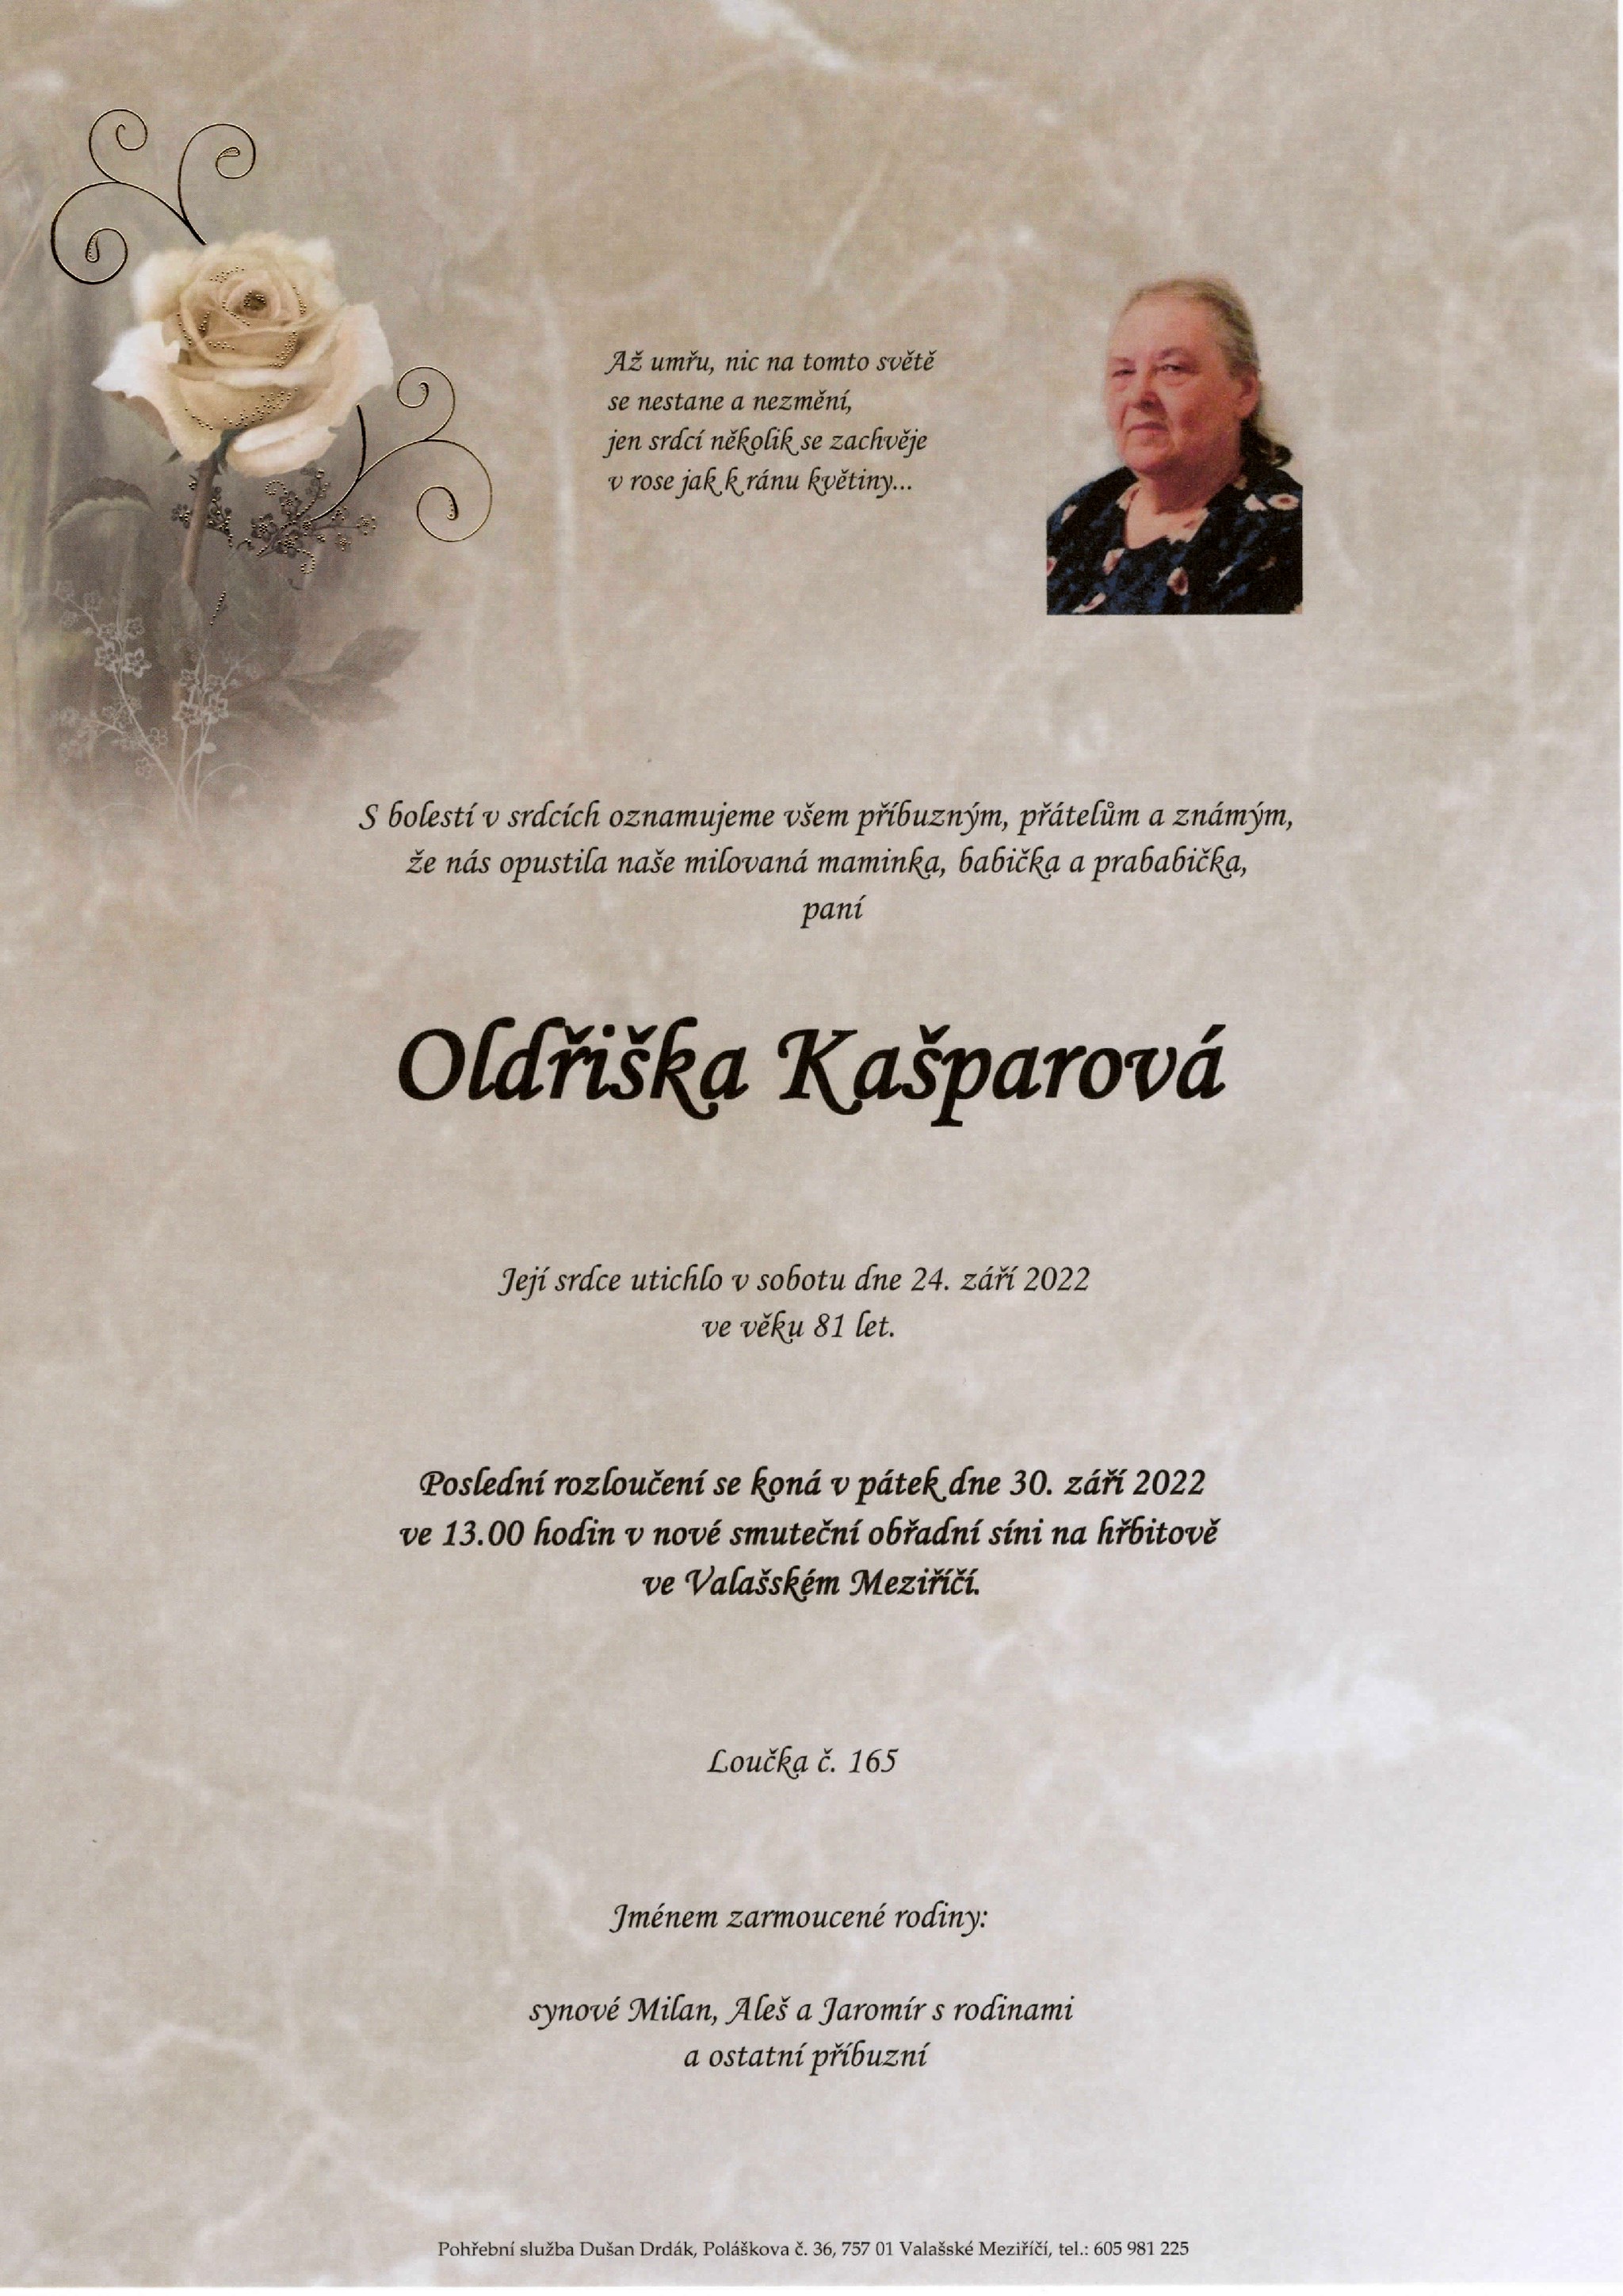 Oldřiška Kašparová